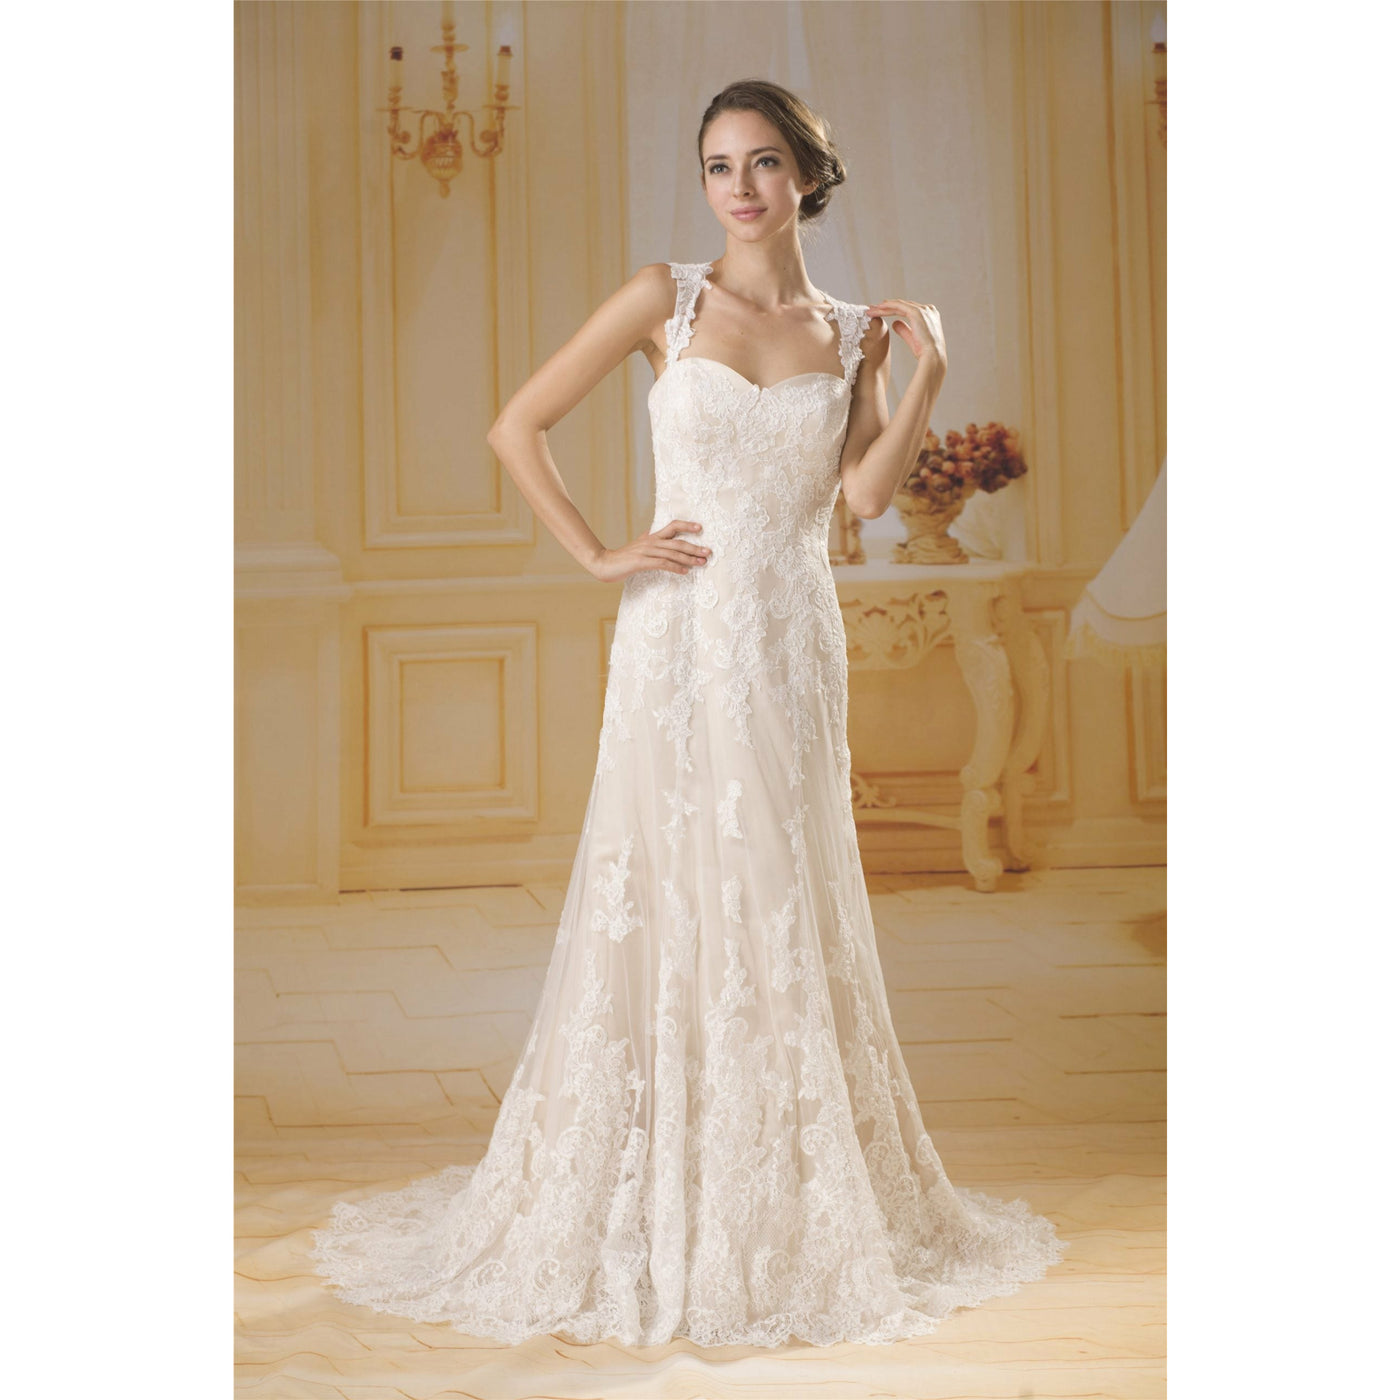 Chicely Queen anne lace appliqués A-line wedding dress